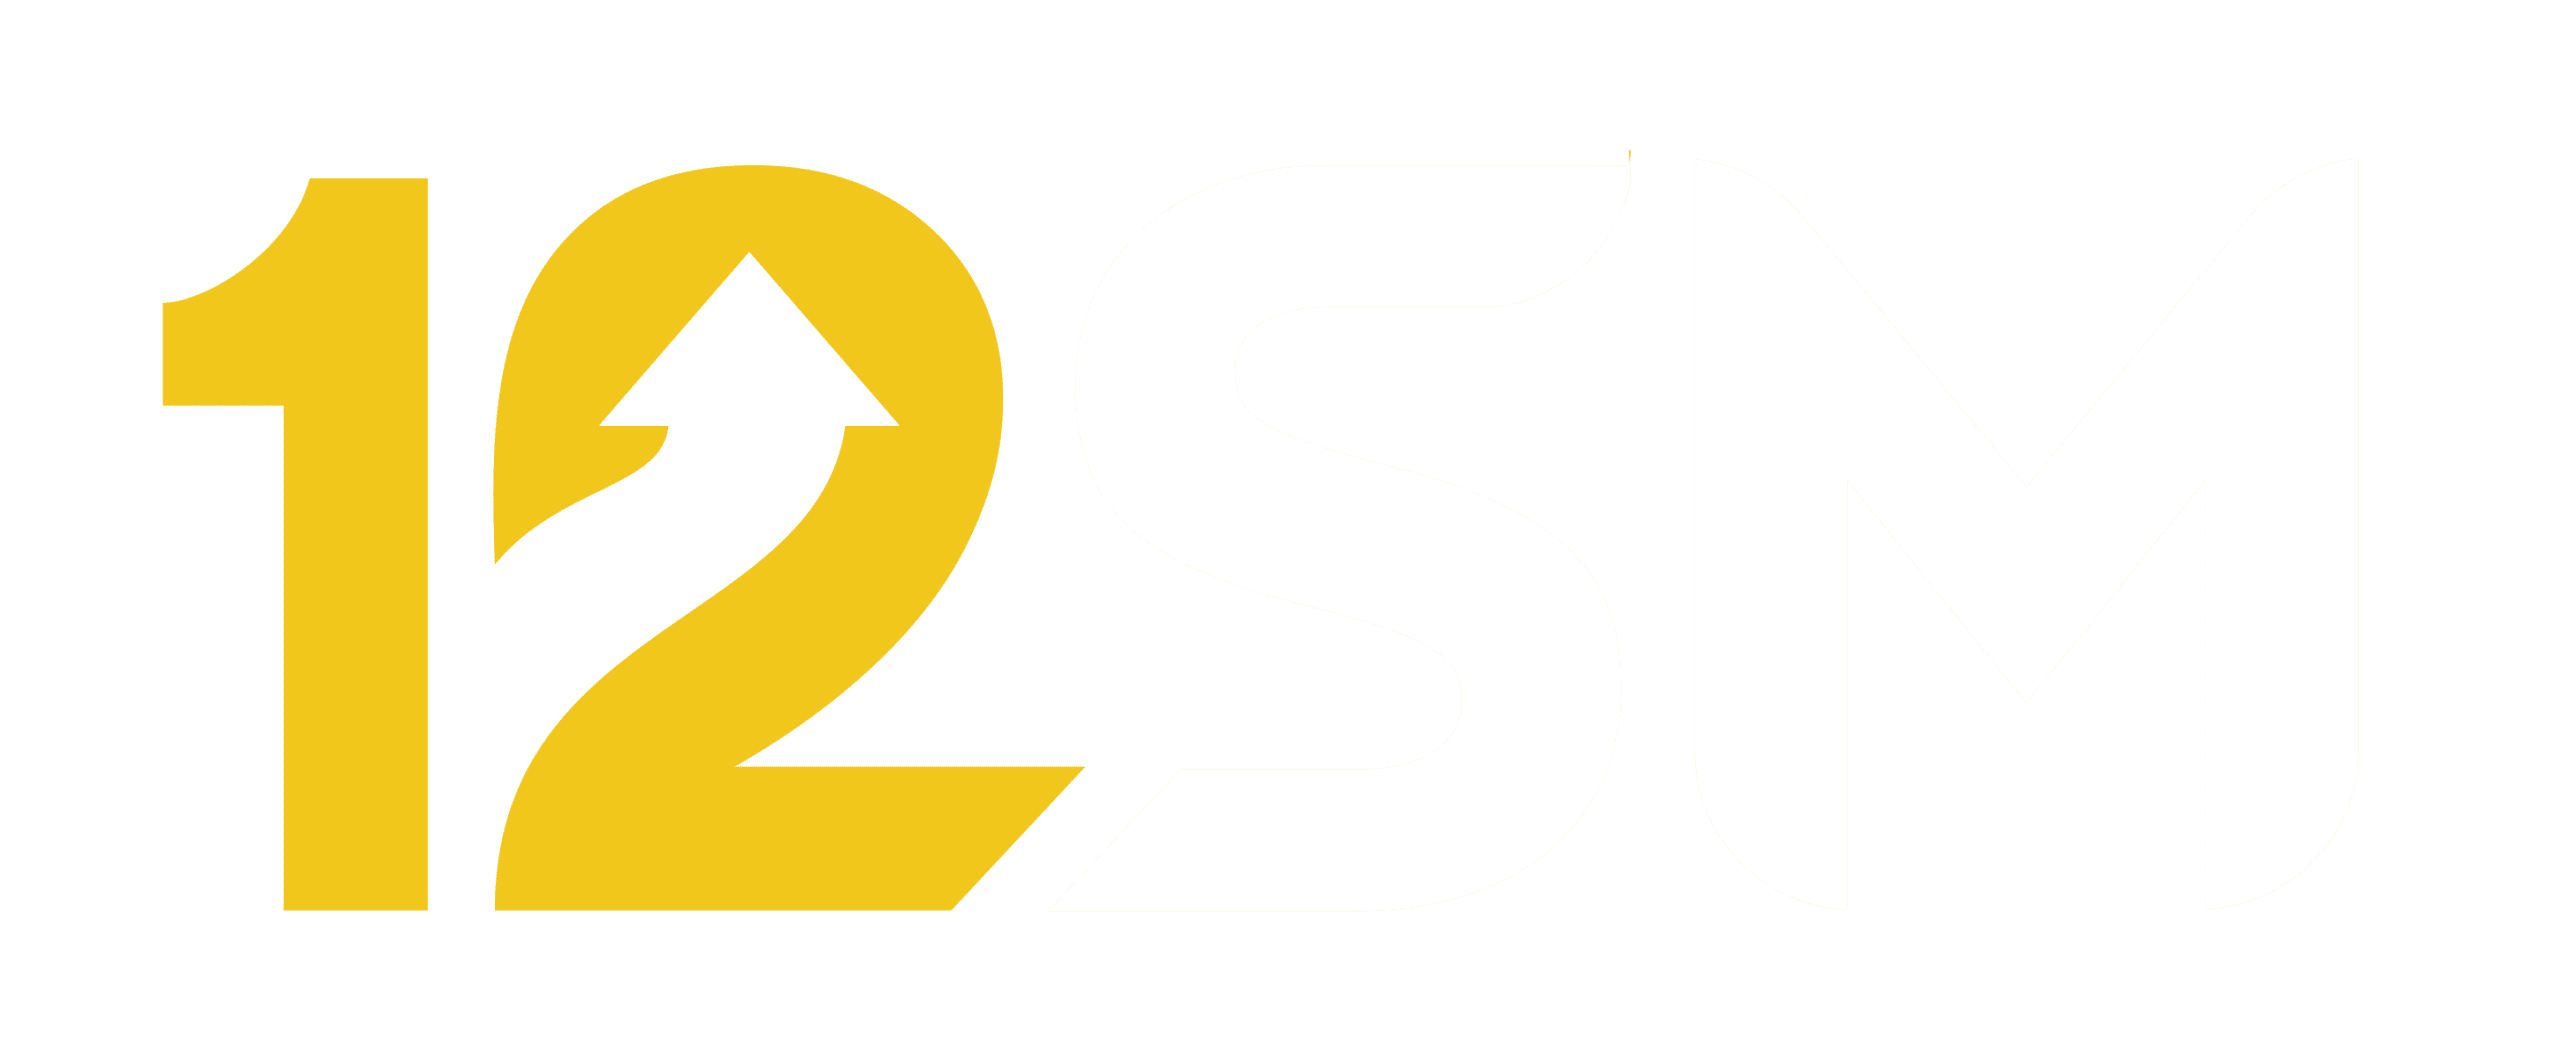 12SM-logo-02